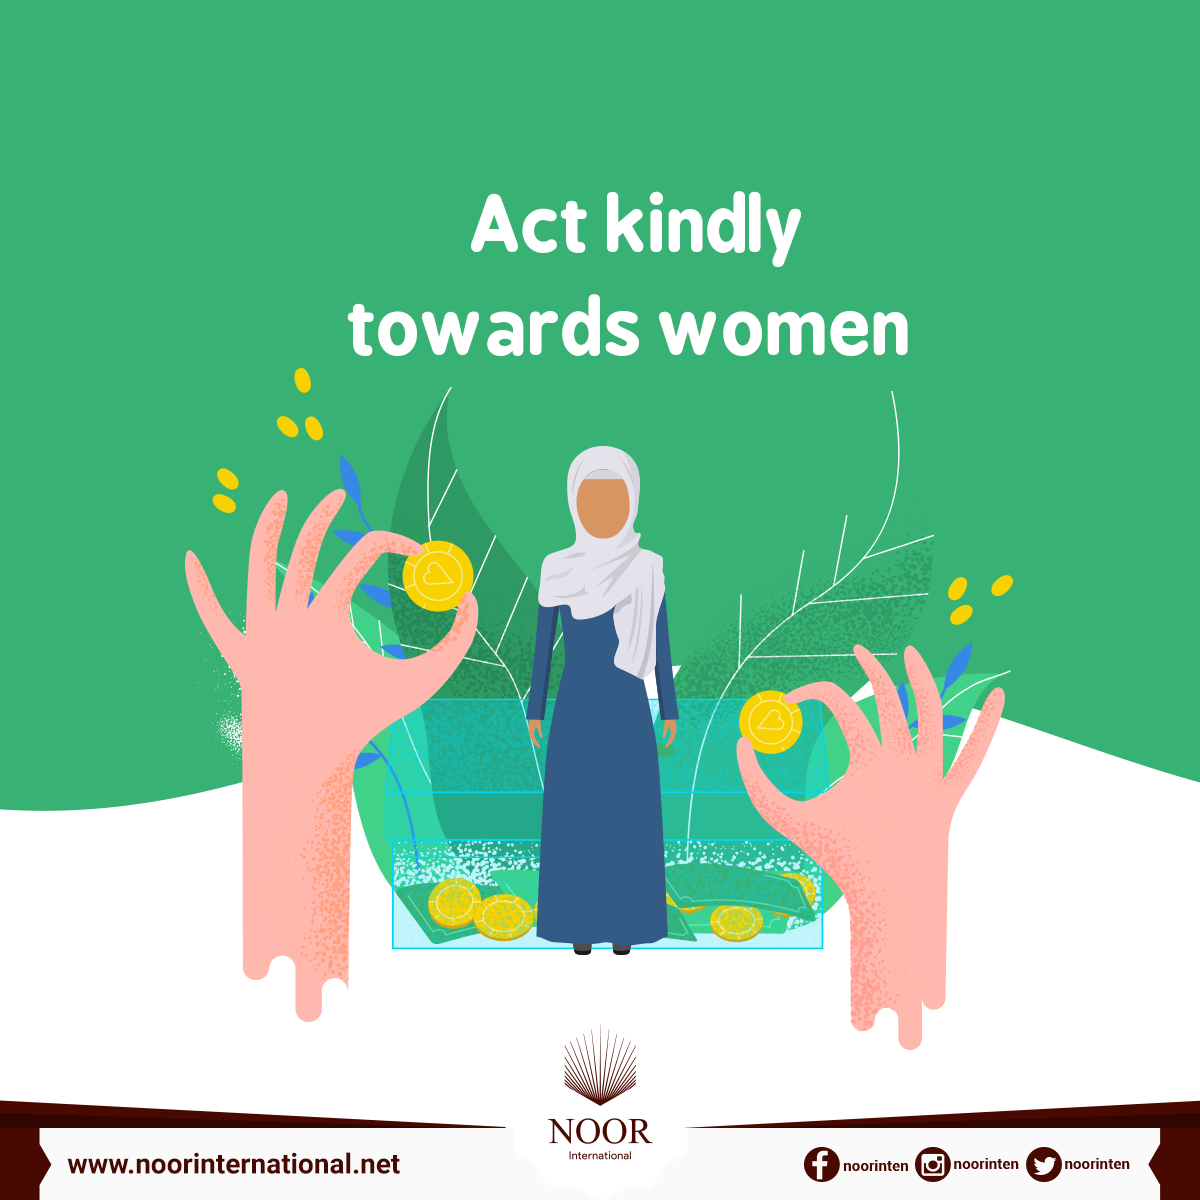 Act kindly towards women